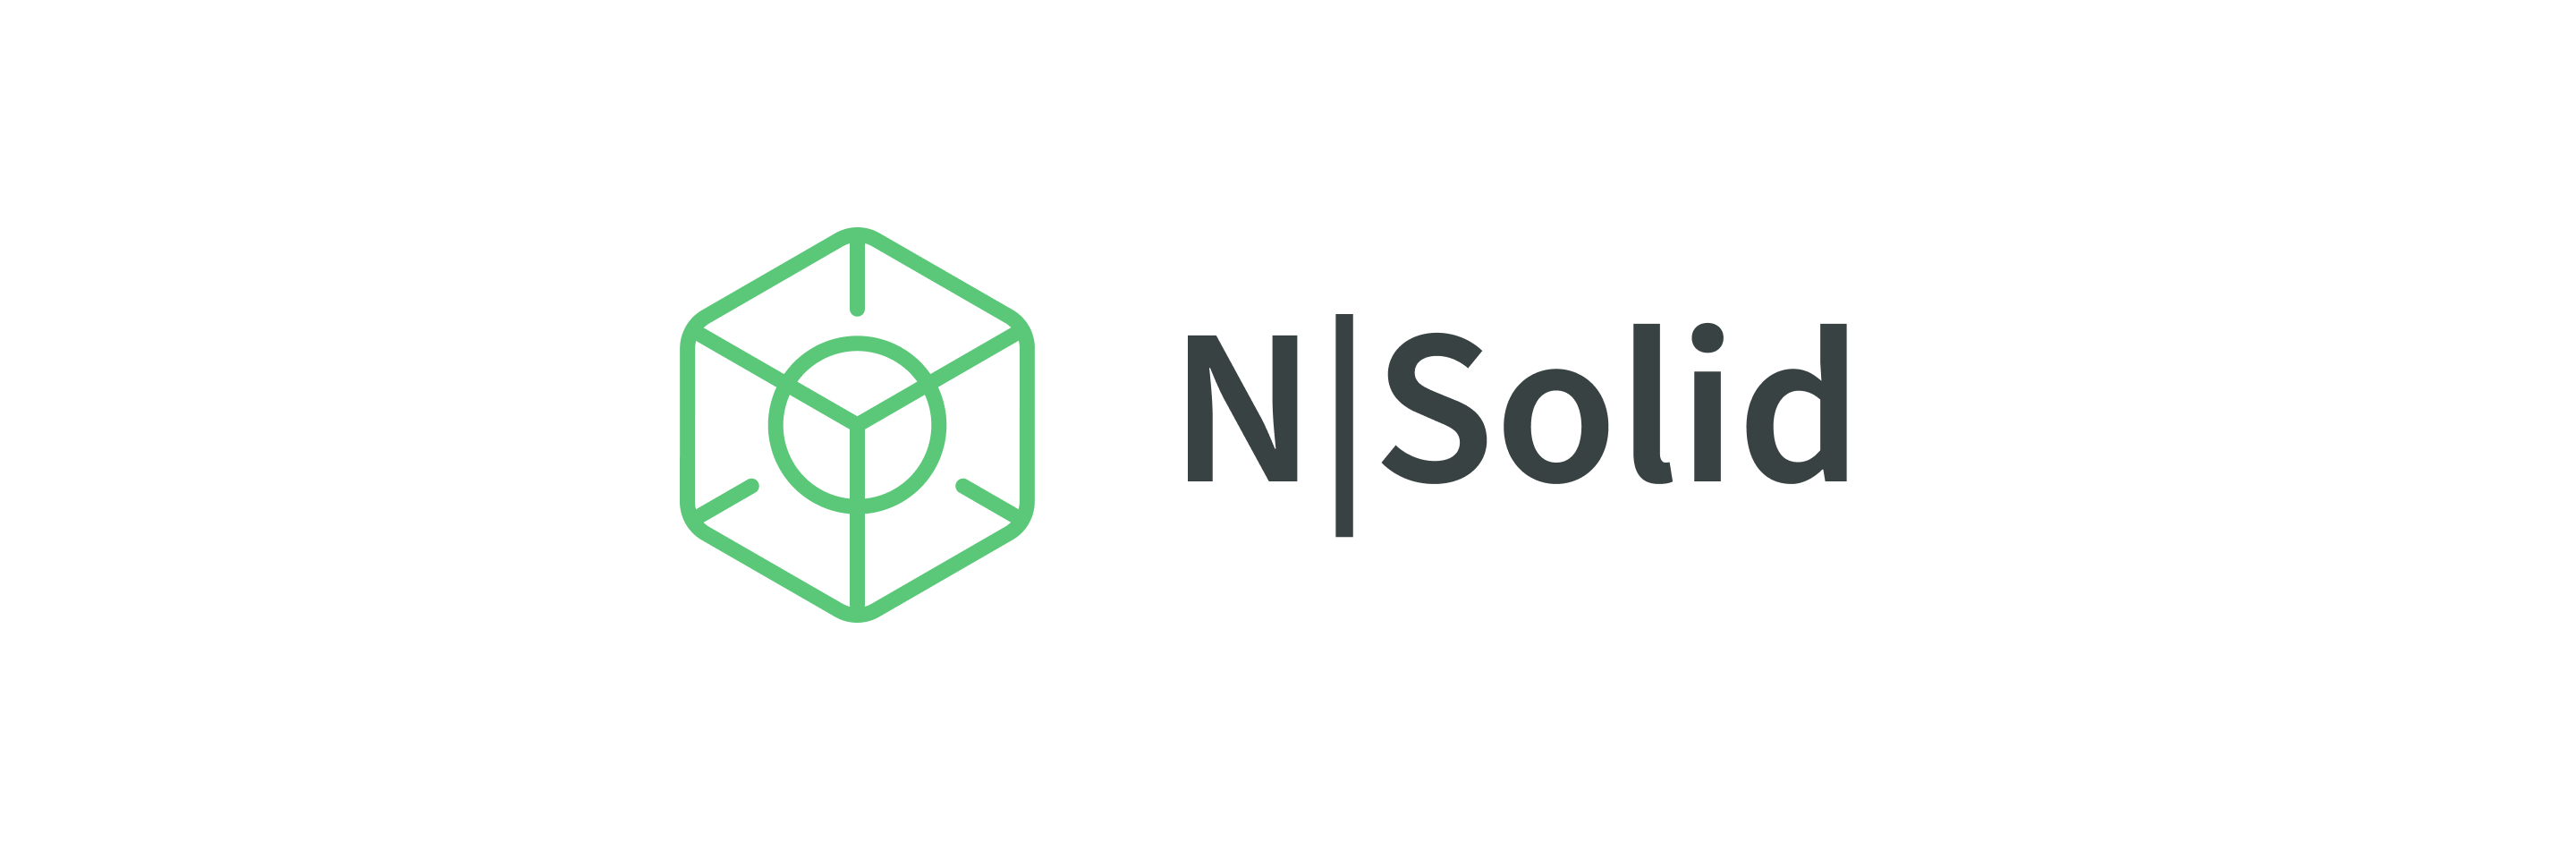 NSolid-logo